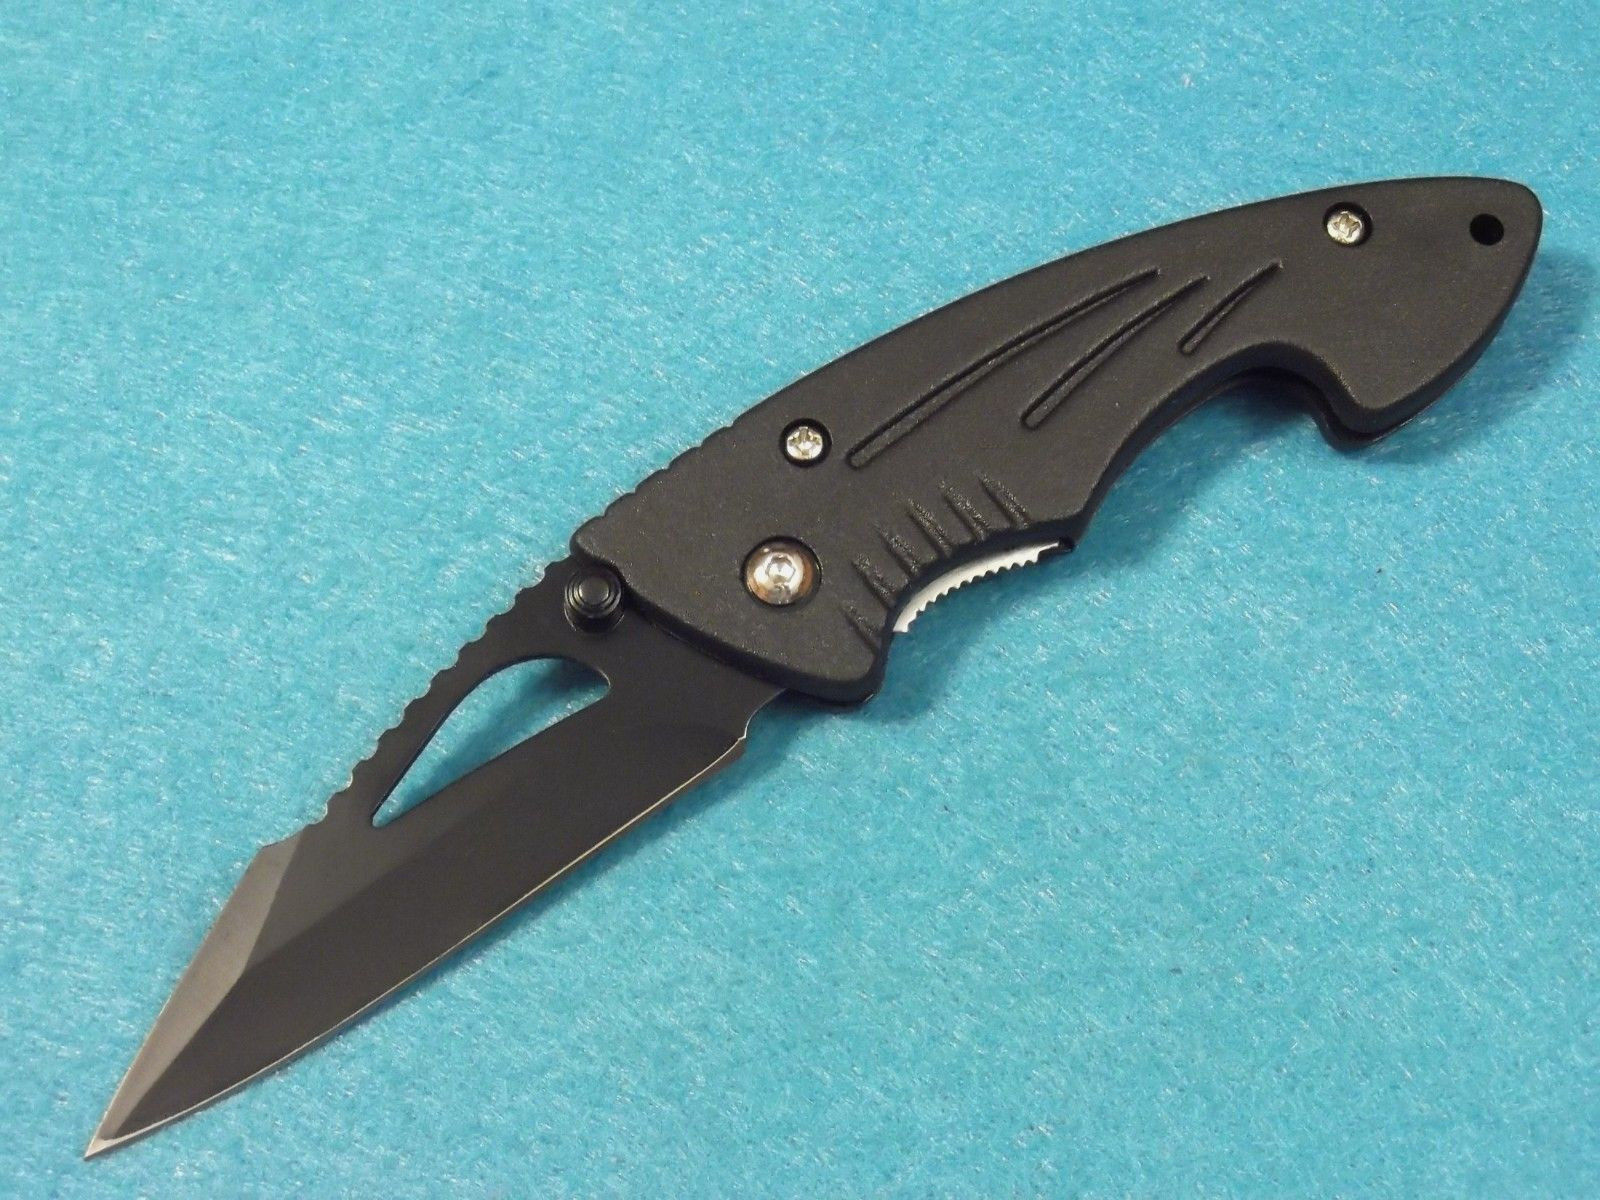 BLACK SHADOW 210426 straight edge inerlock knife with pocketclip 4 1/2" closed 